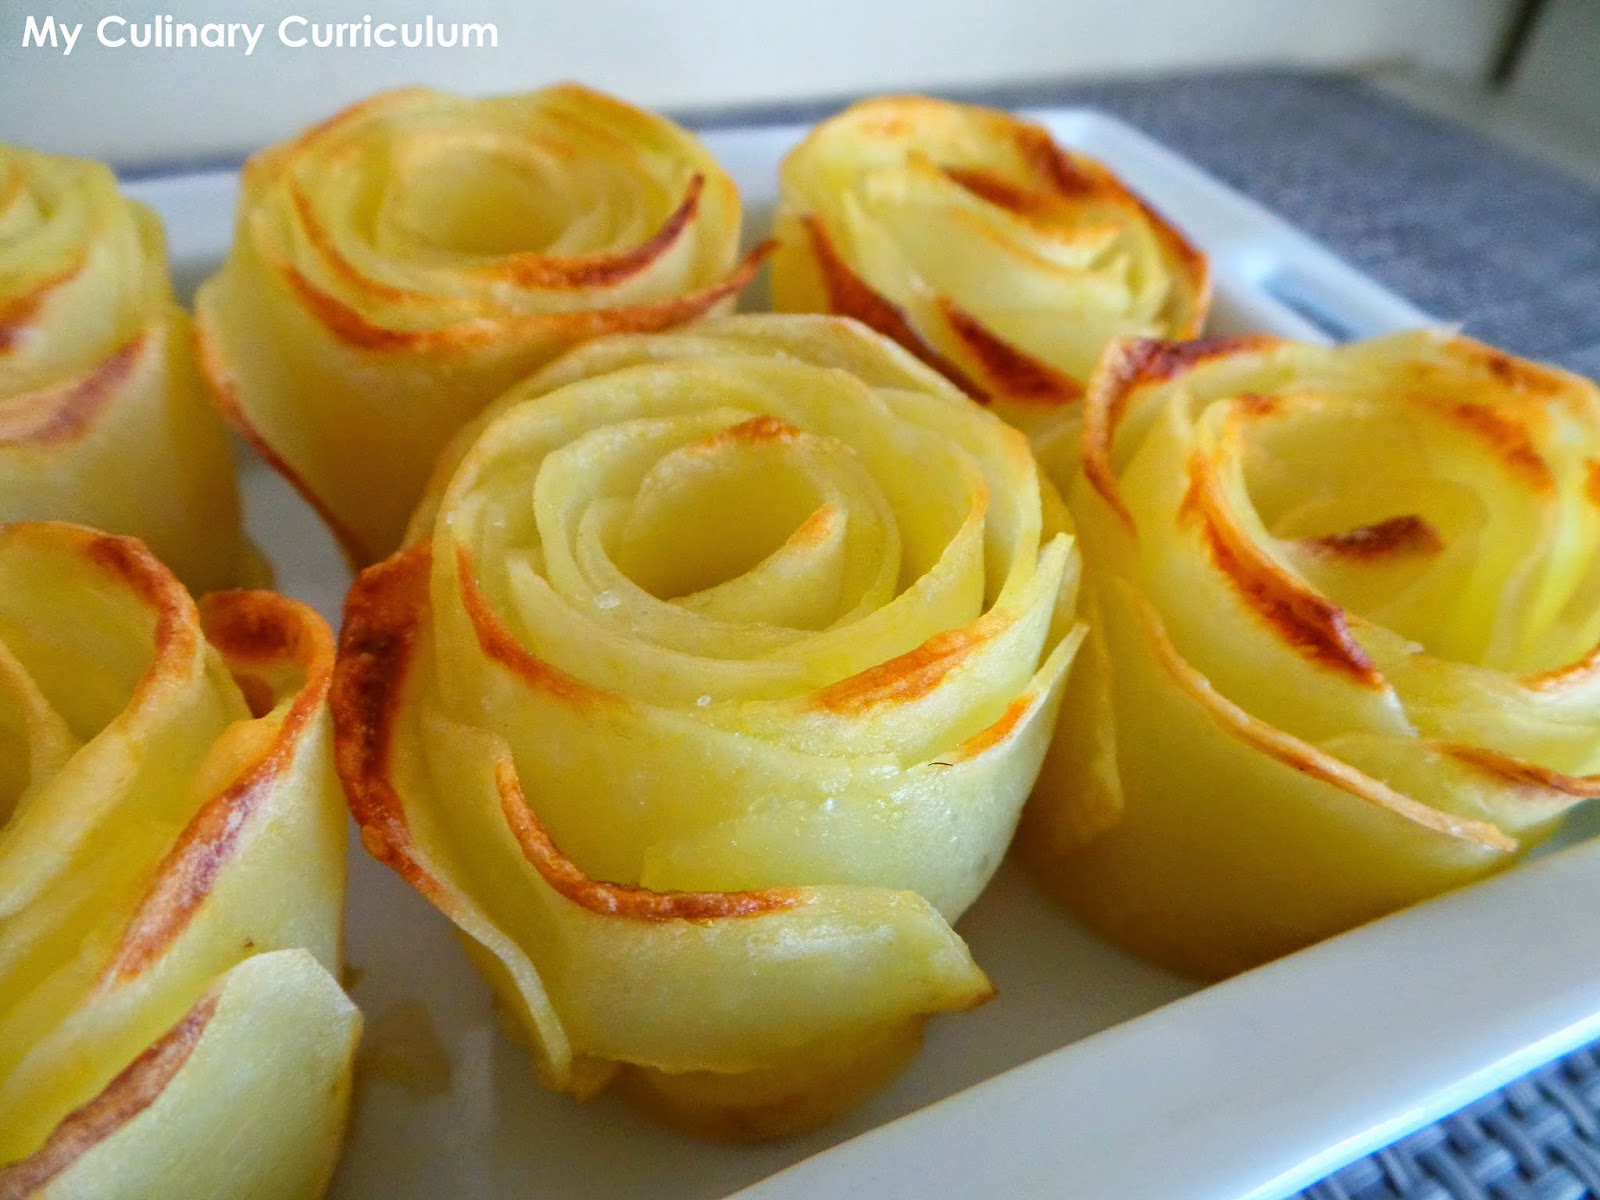 My Culinary Curriculum Roses de pommes de terre (Potatoes